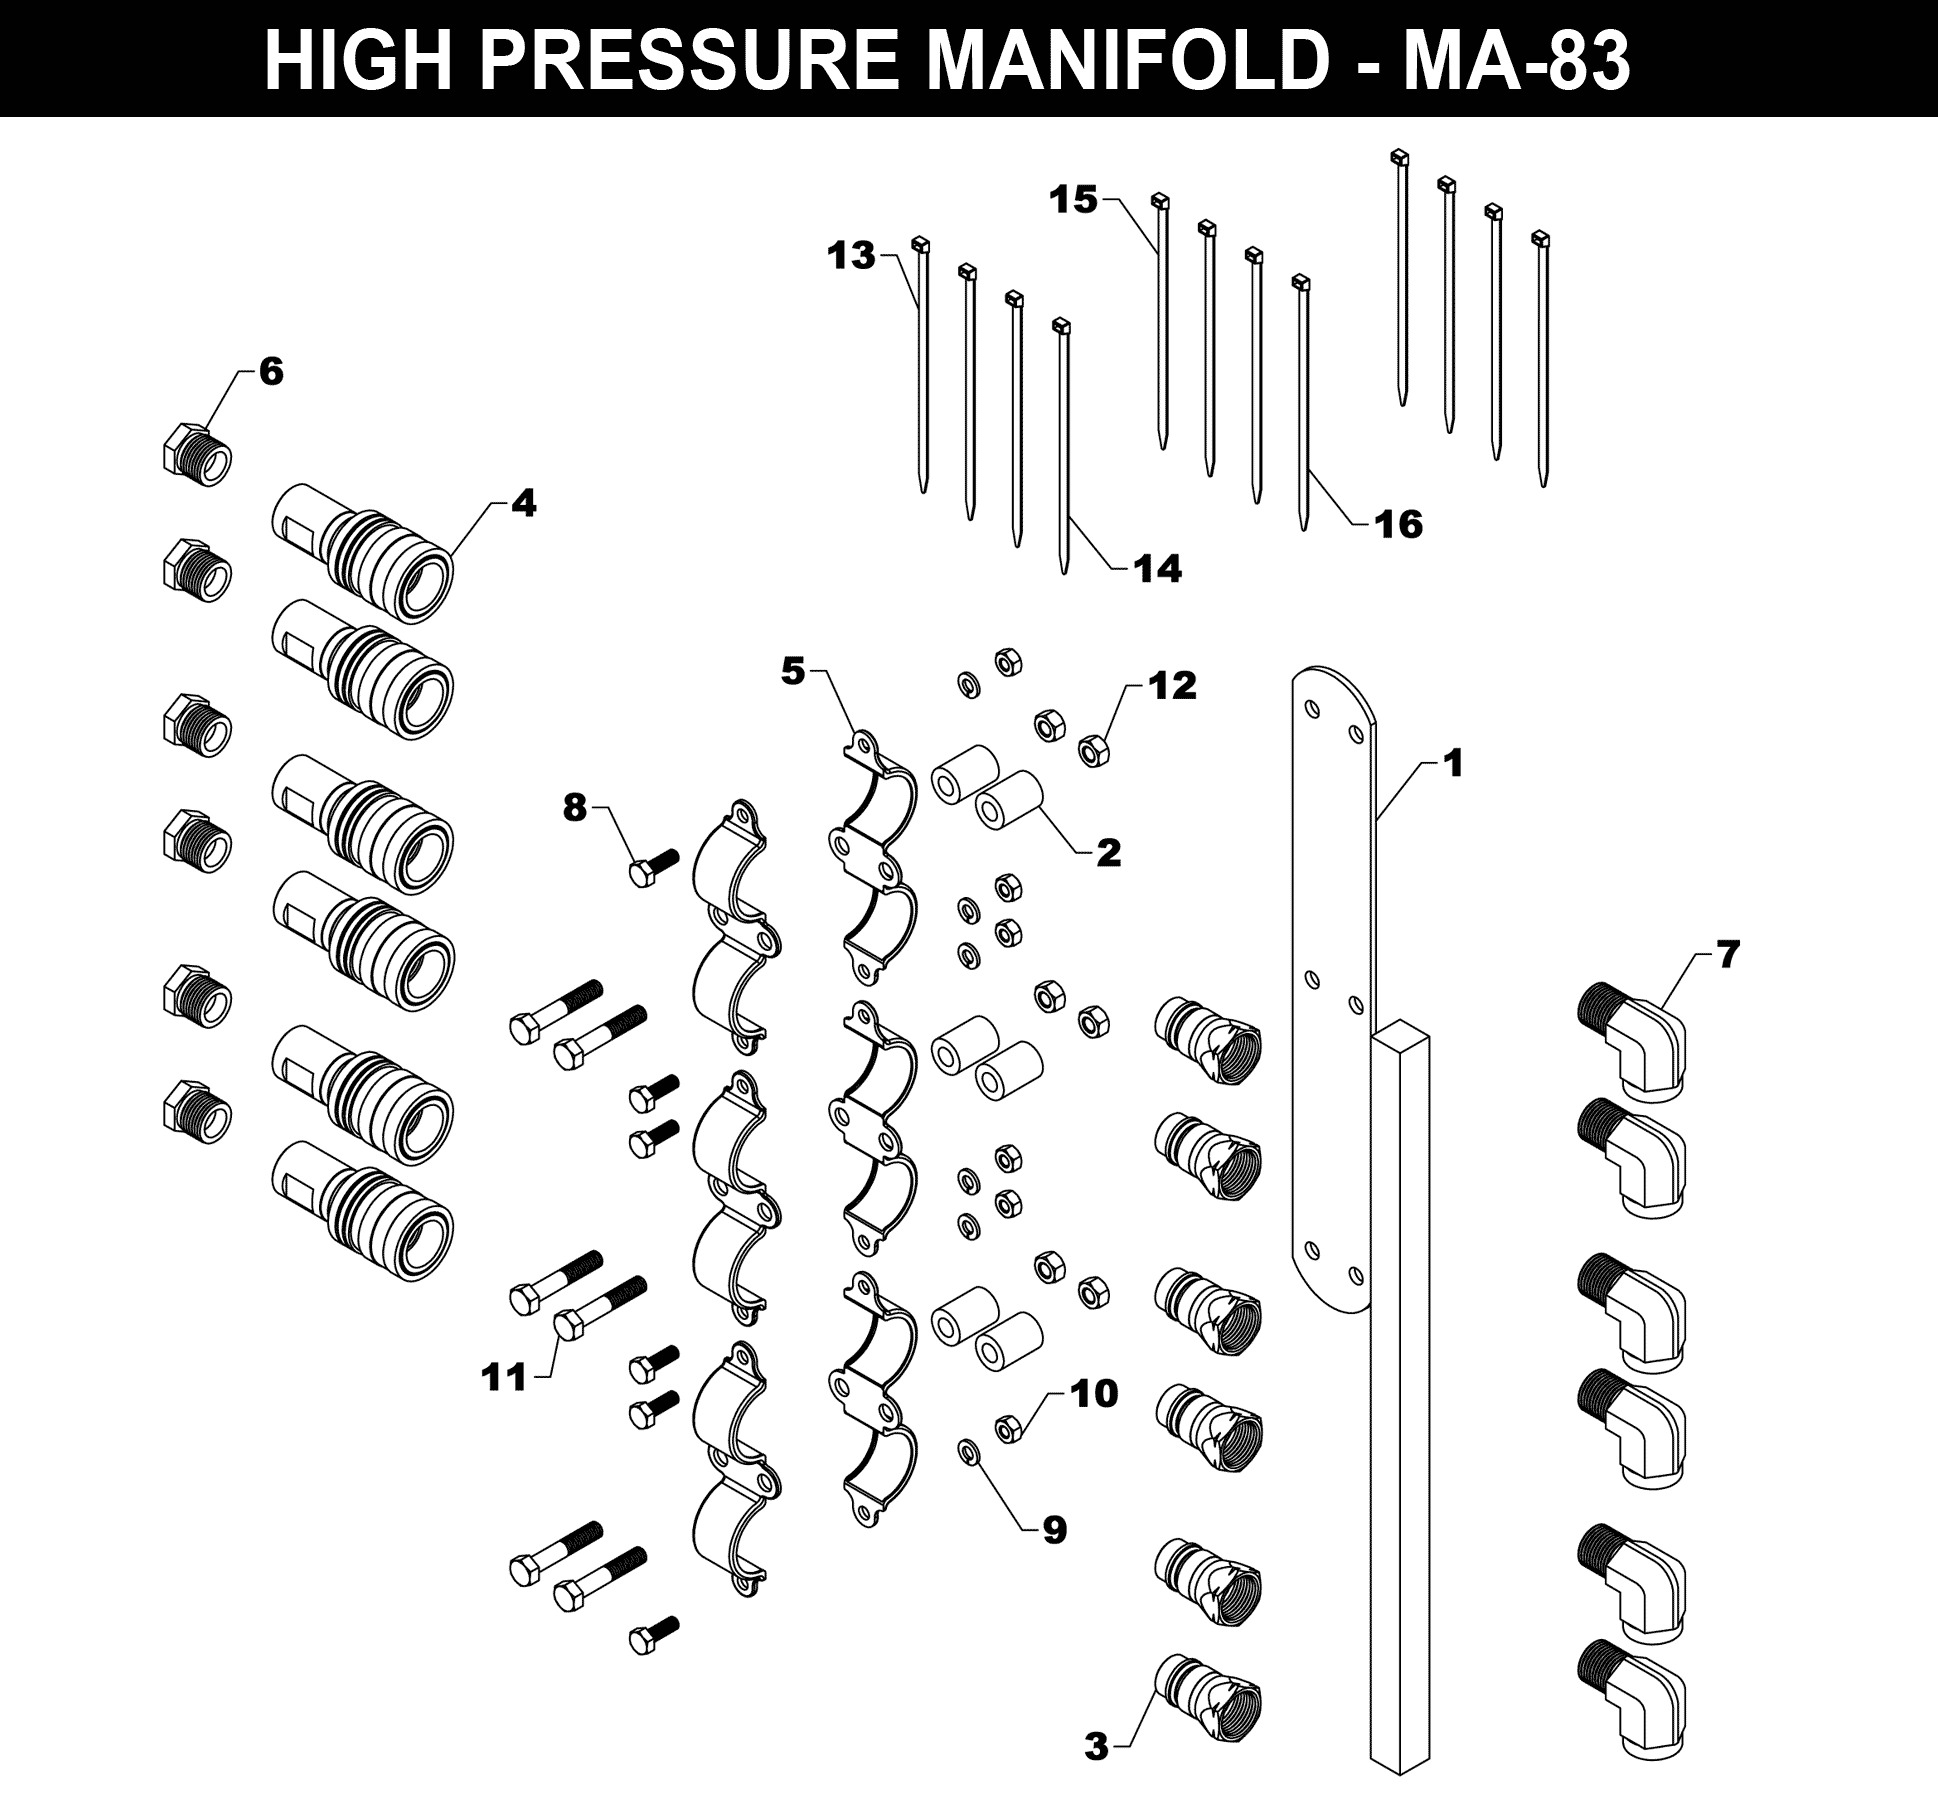 Standard Manifold - MA-83